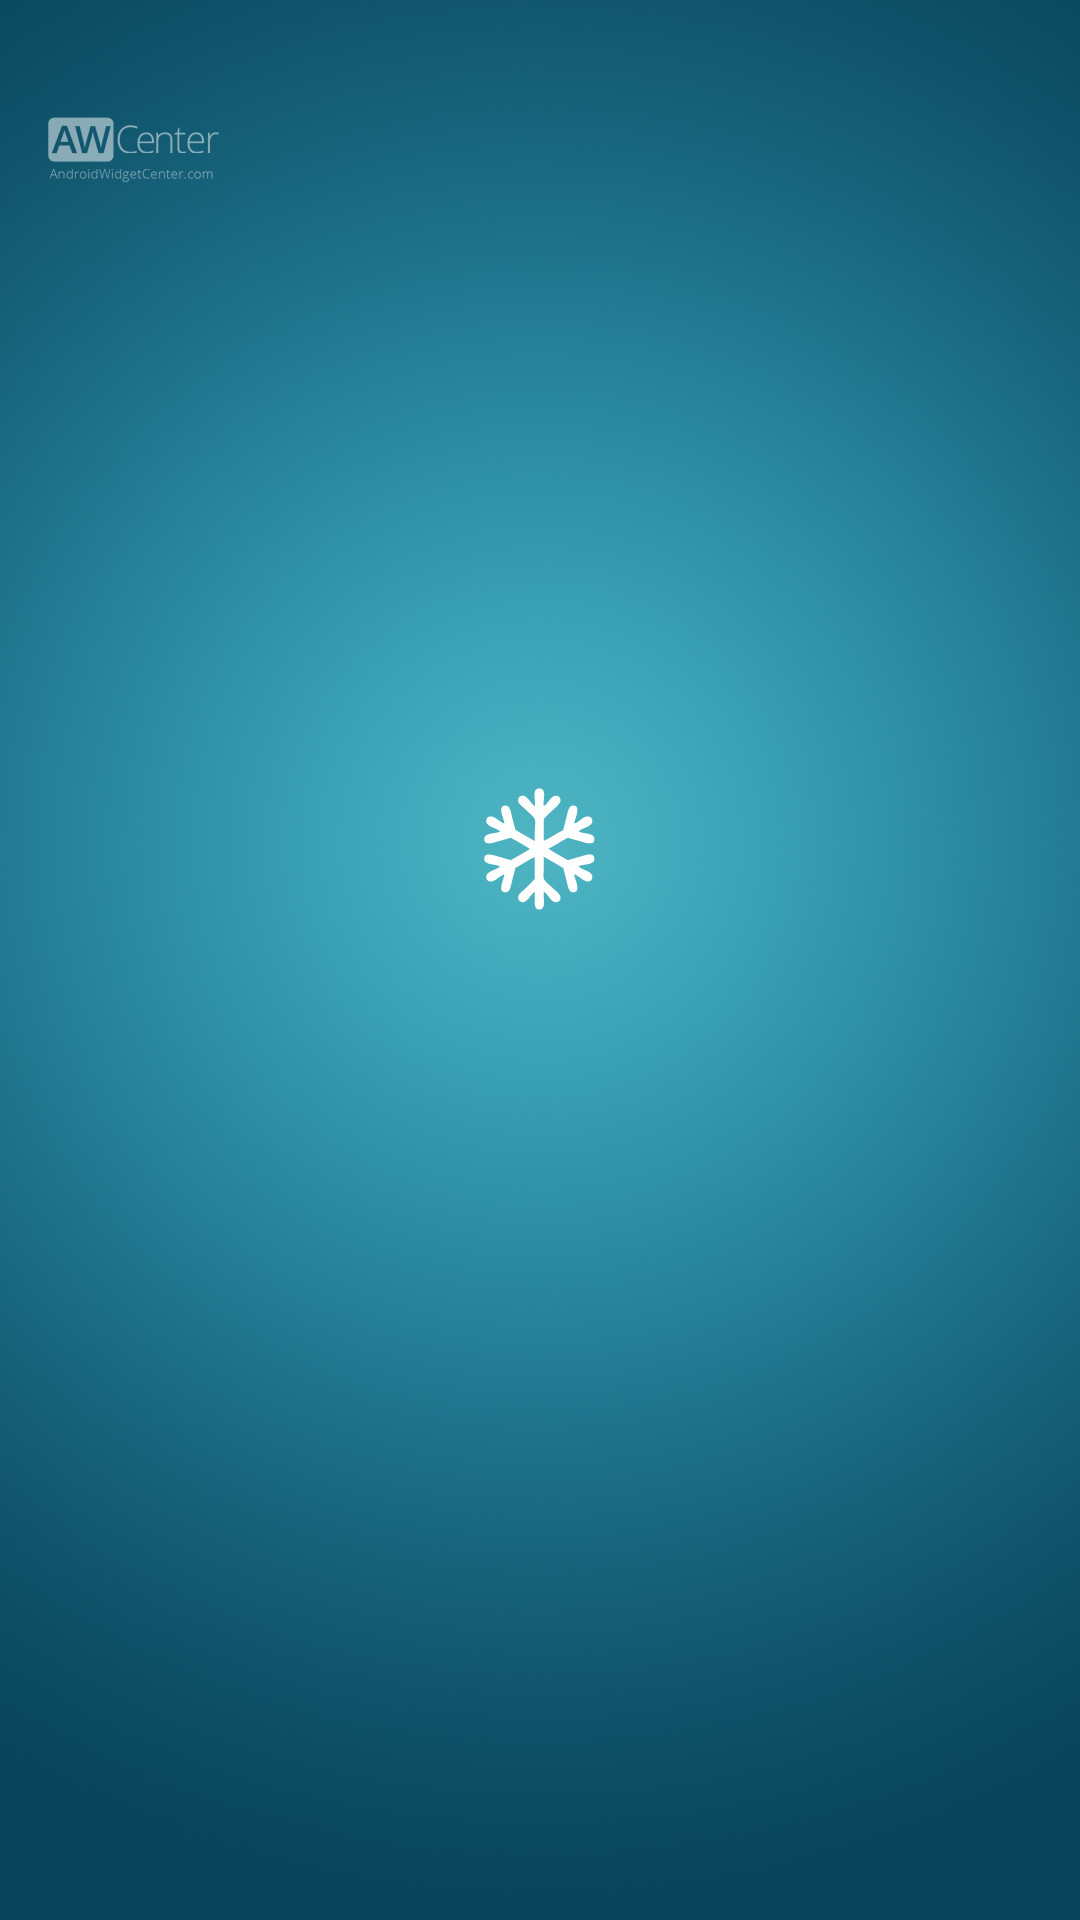 1080x1920 1 - Android HD Wallpaper - Snowflake